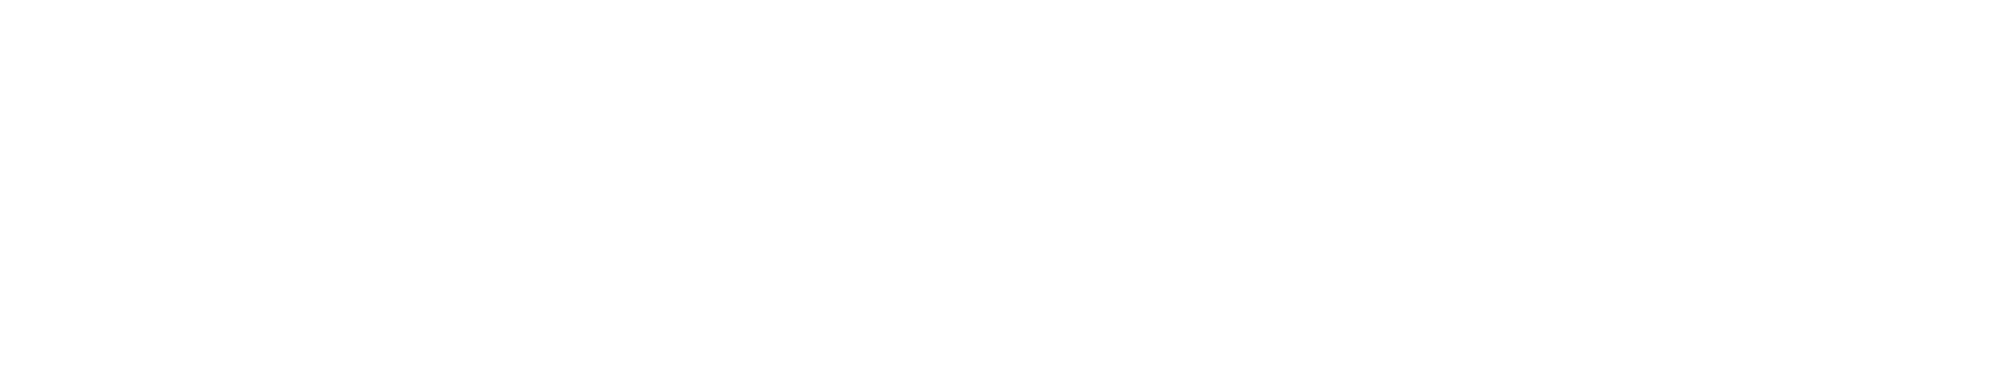 YouTube Music Monochrome Logo